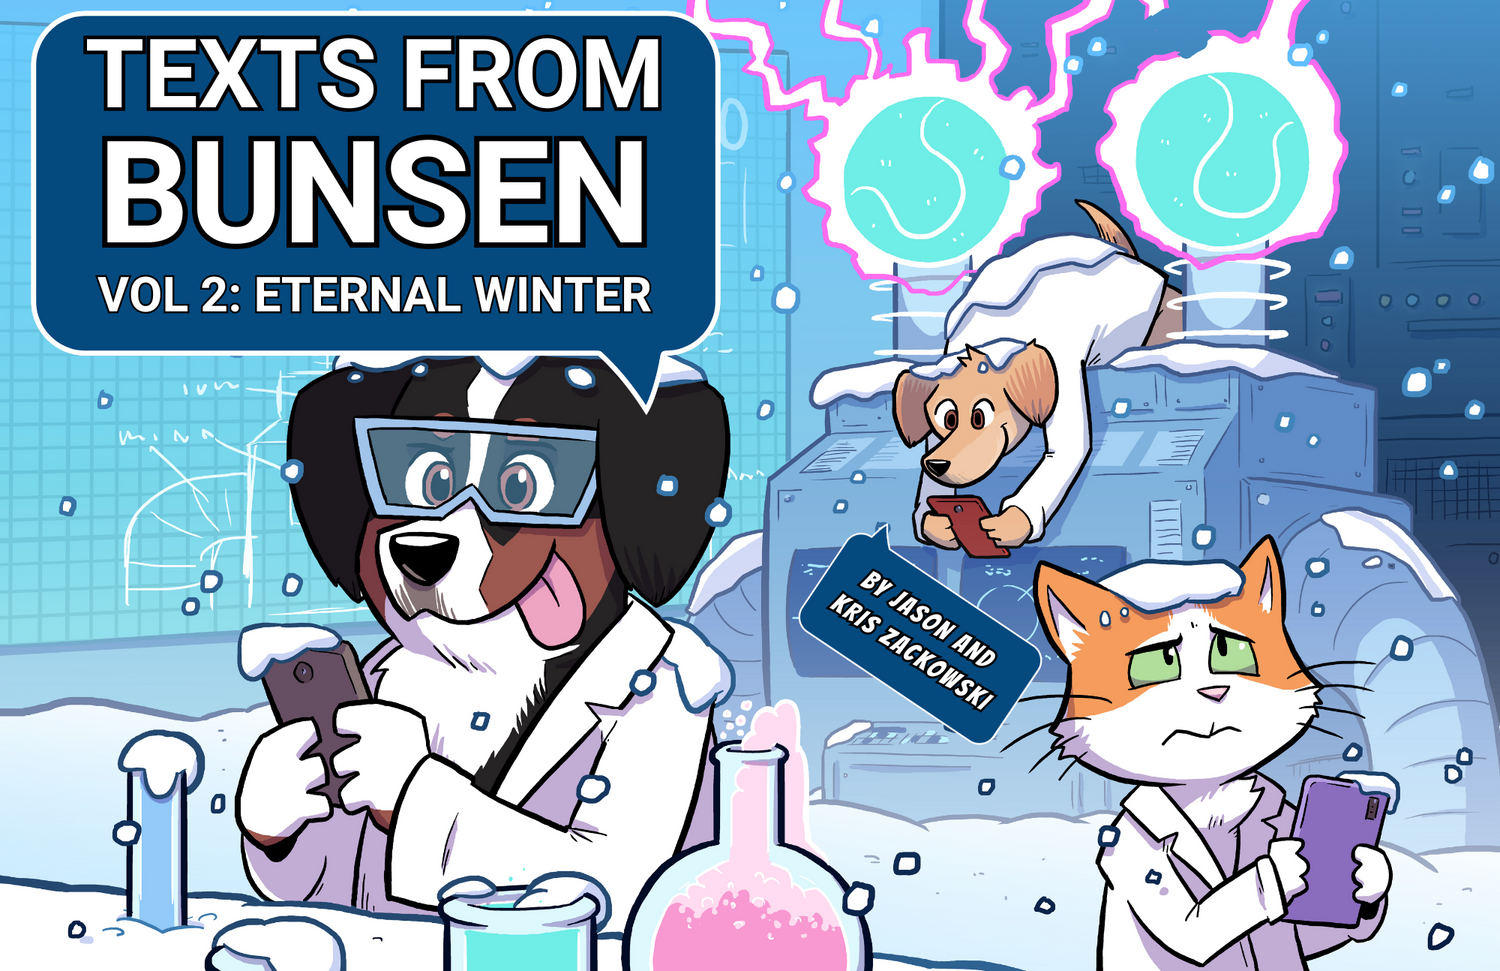 Texts From Bunsen Volume 2: Eternal Winter Collection